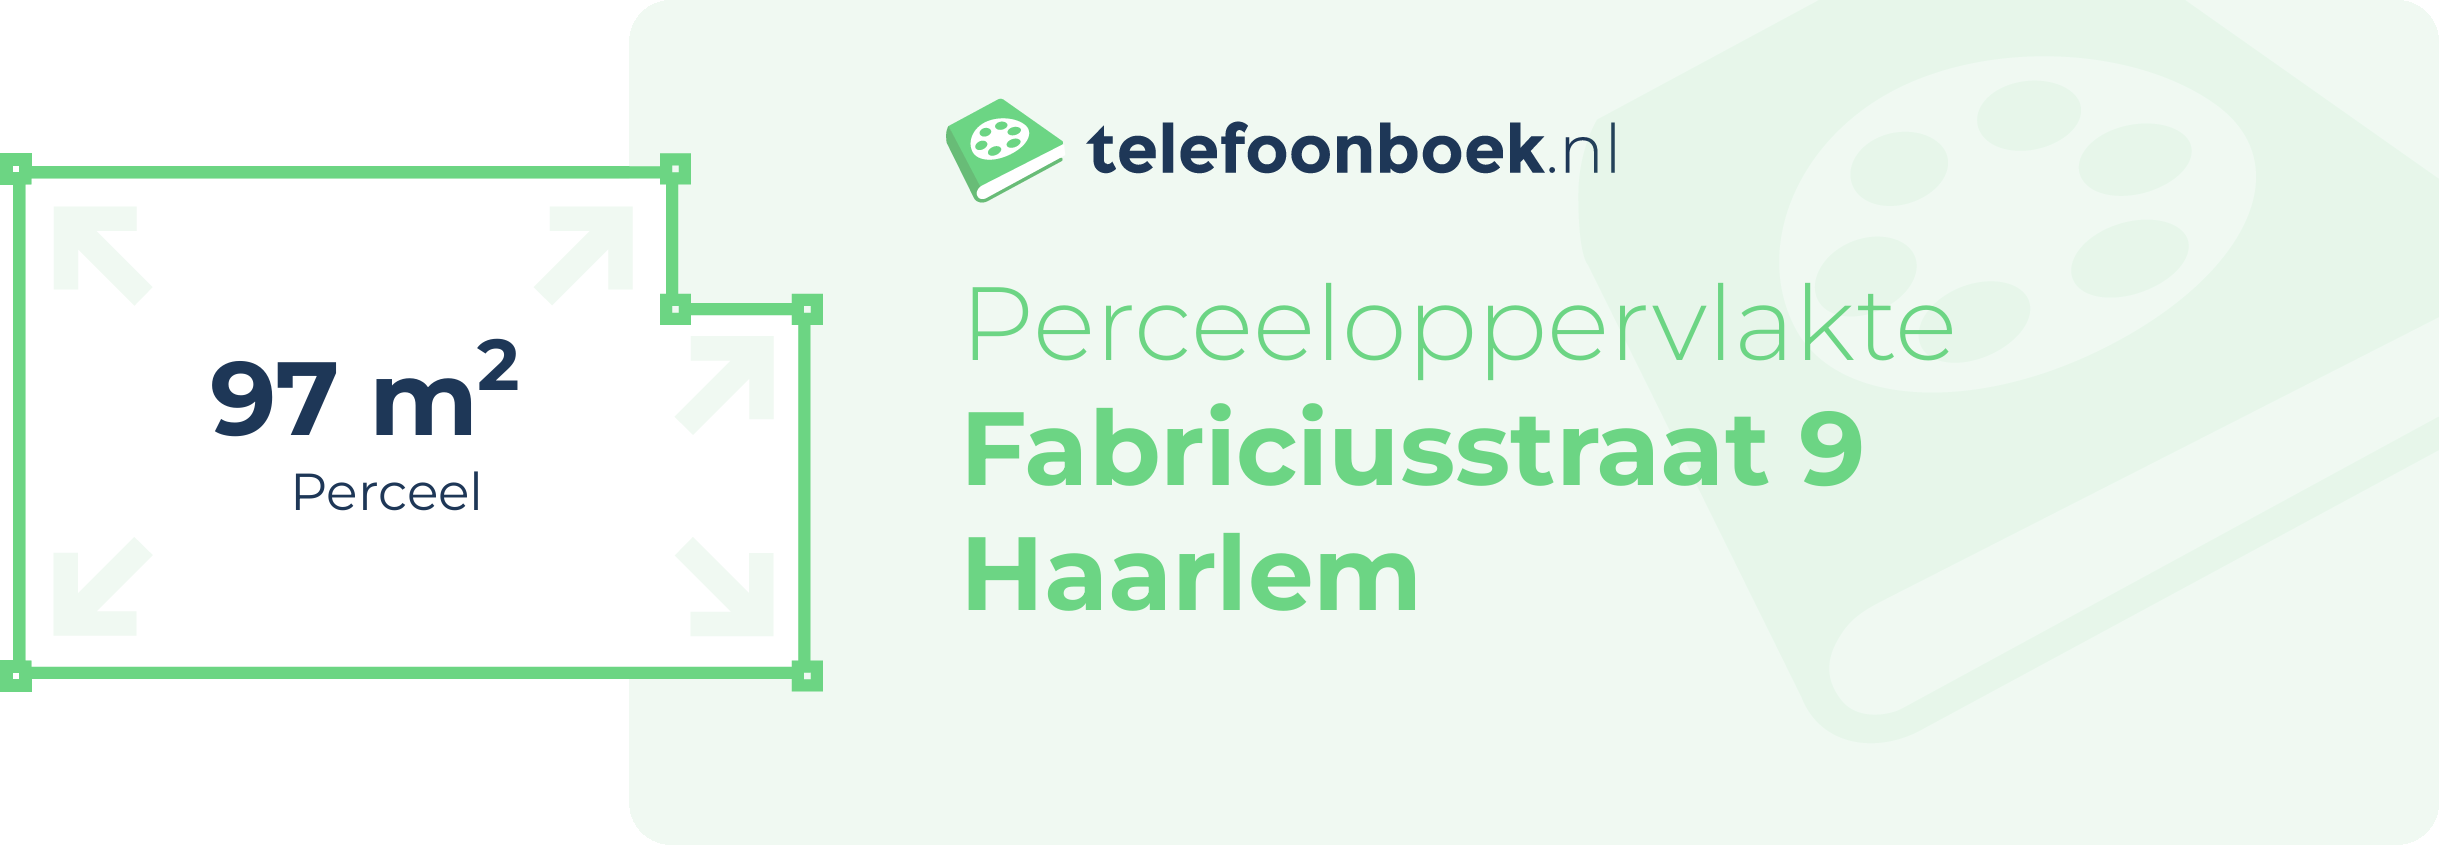 Perceeloppervlakte Fabriciusstraat 9 Haarlem